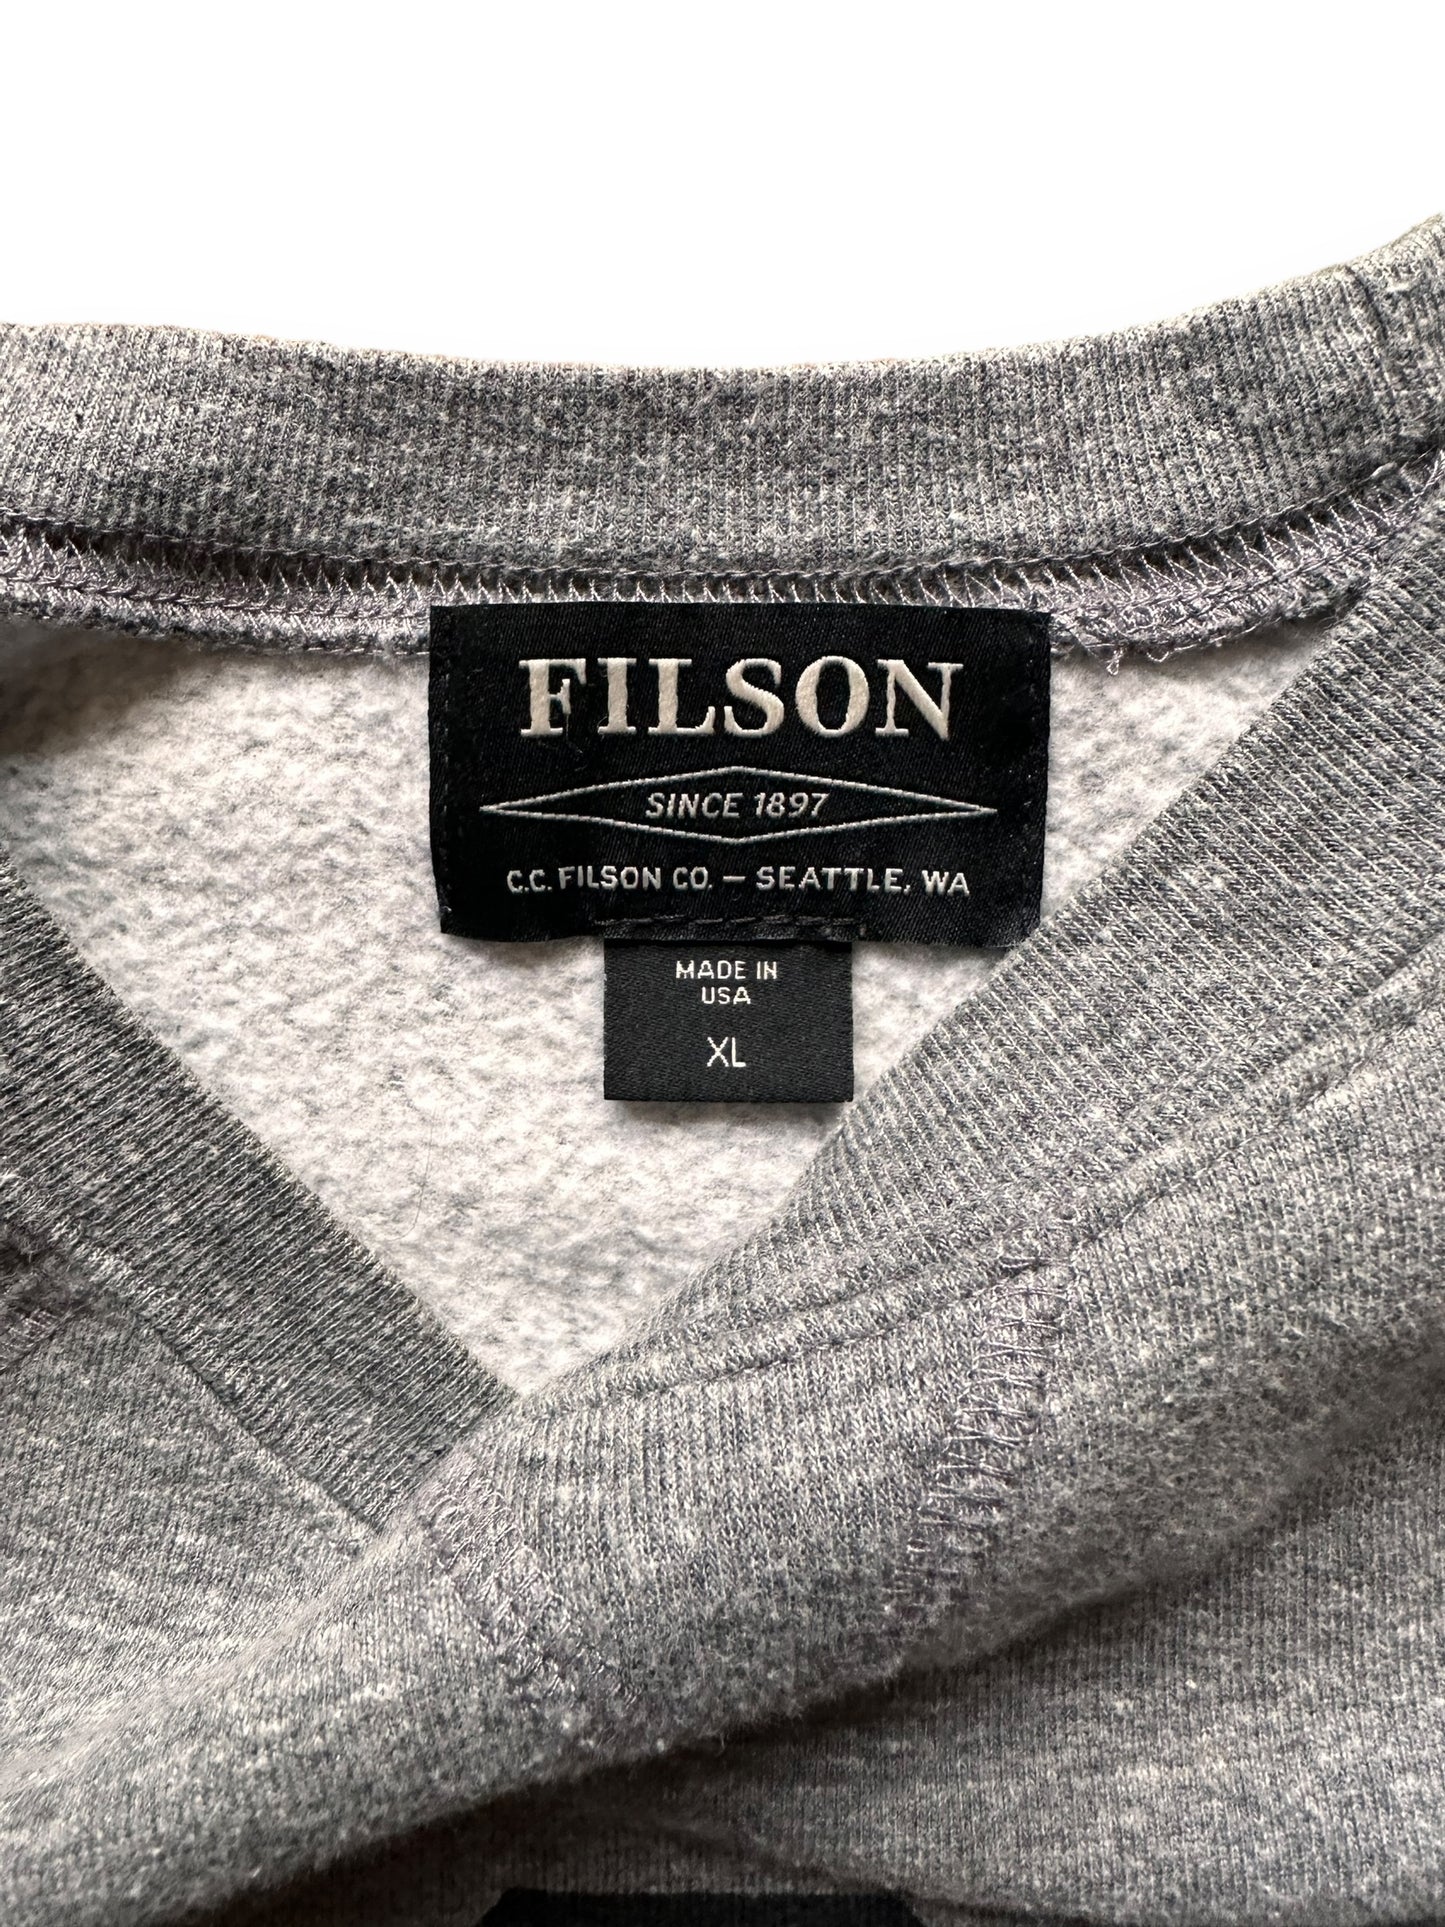 Tag View on Filson CCF Single V Crewneck Sweatshirt SZ XL |  Barn Owl Vintage Goods Seattle | Filson Bargain Outlet